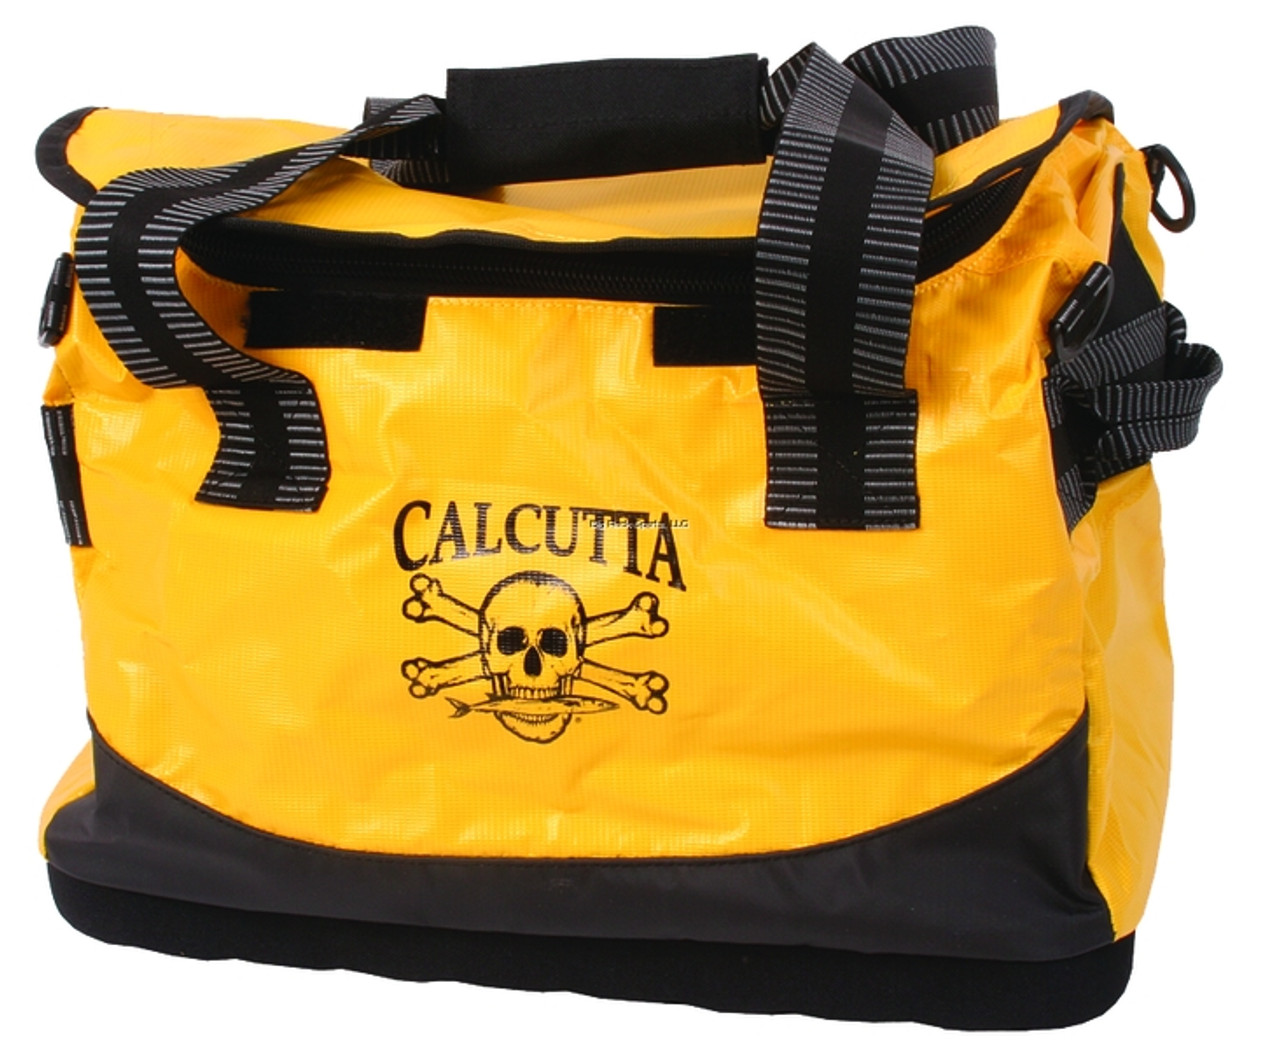 Calcutta Boat Bag, Waterproof, Large.